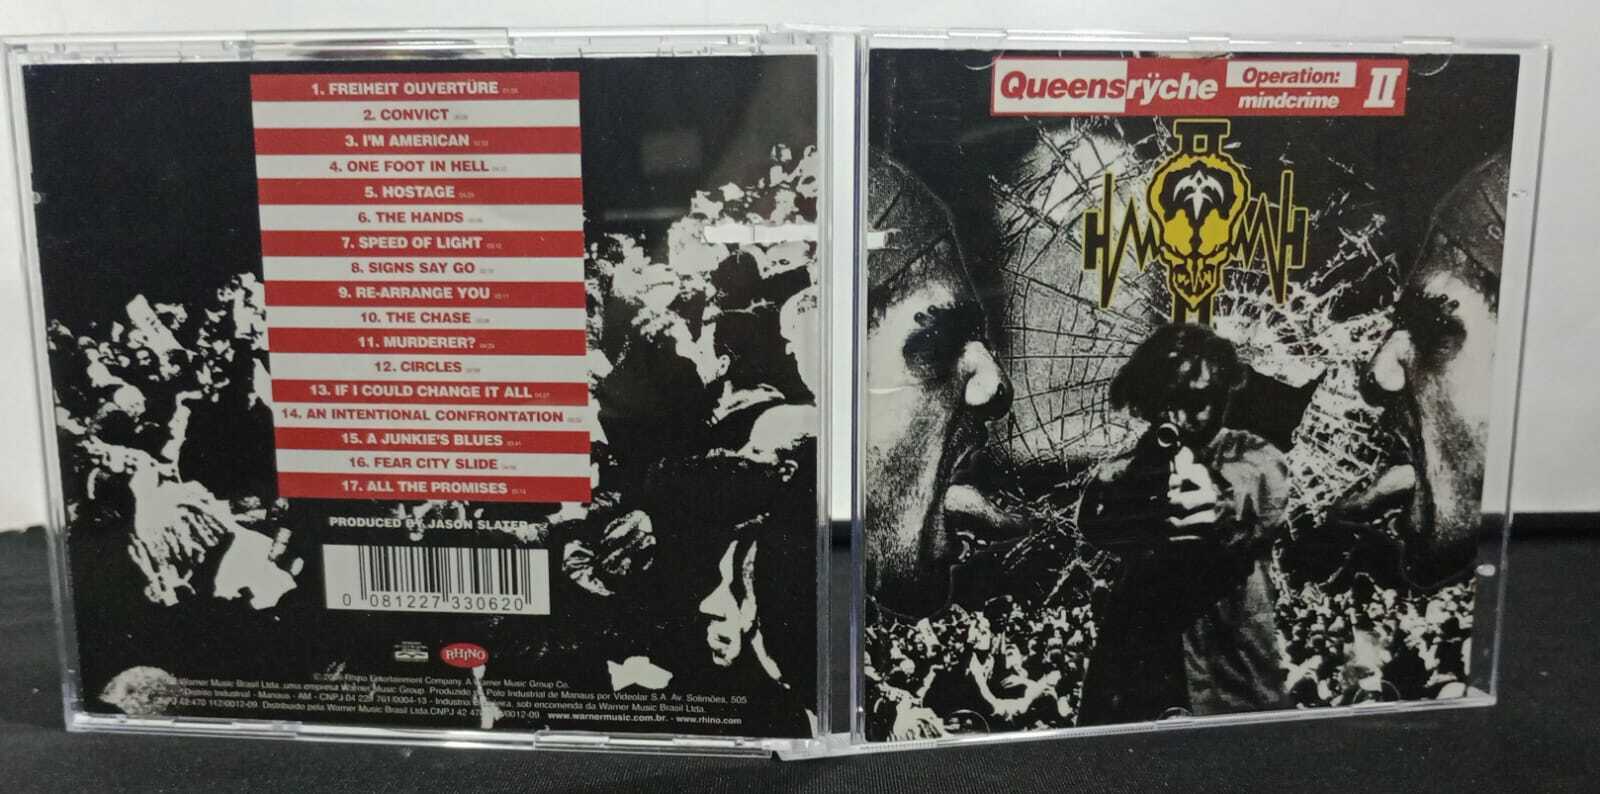 CD - Queensryche - Operation Mindcrime II